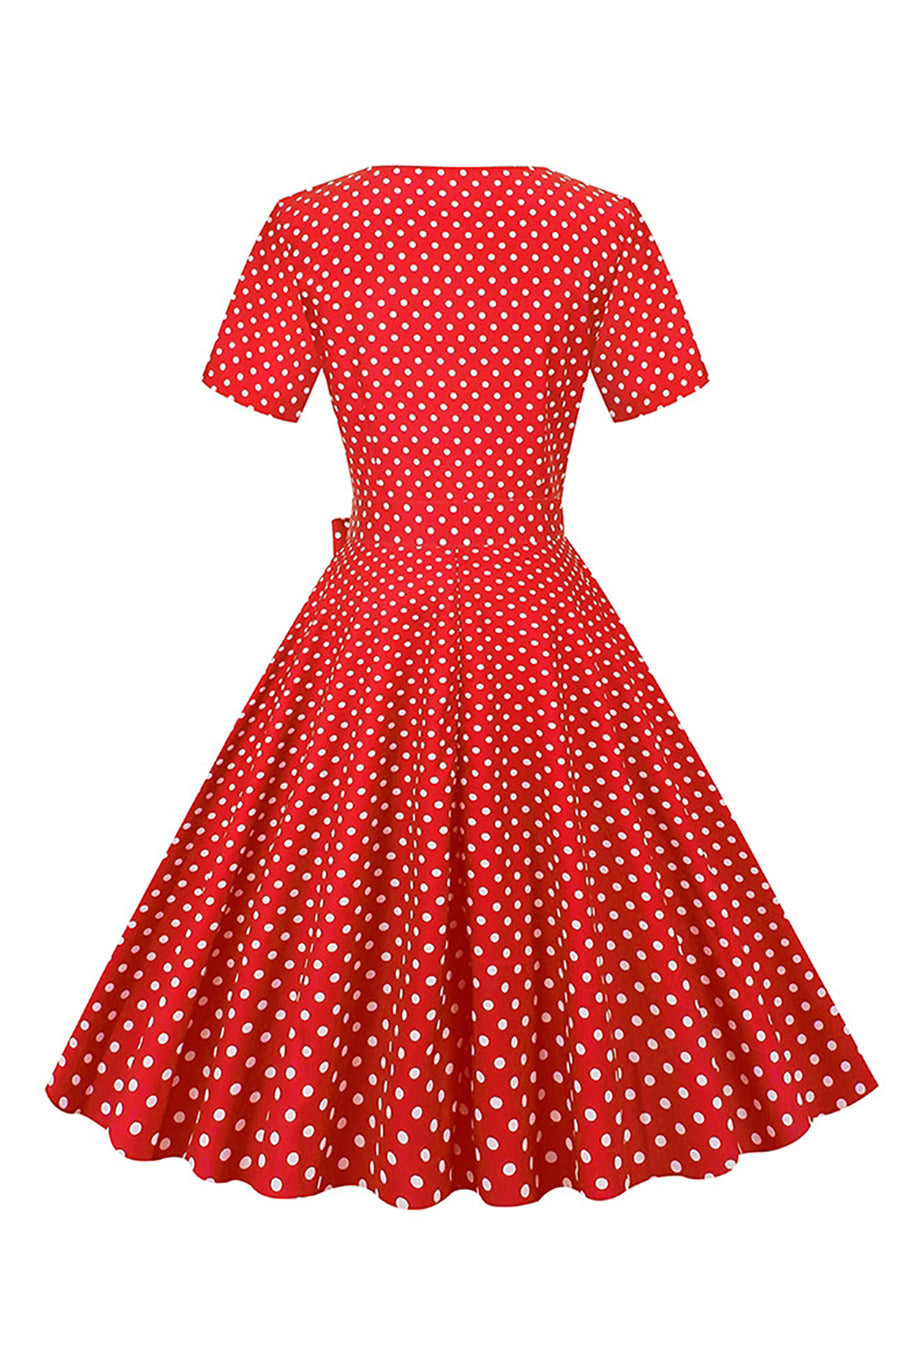 1950s Dresses | Vintage Retro 50s Dresses Online | Zapaka – Page 5 – ZAPAKA